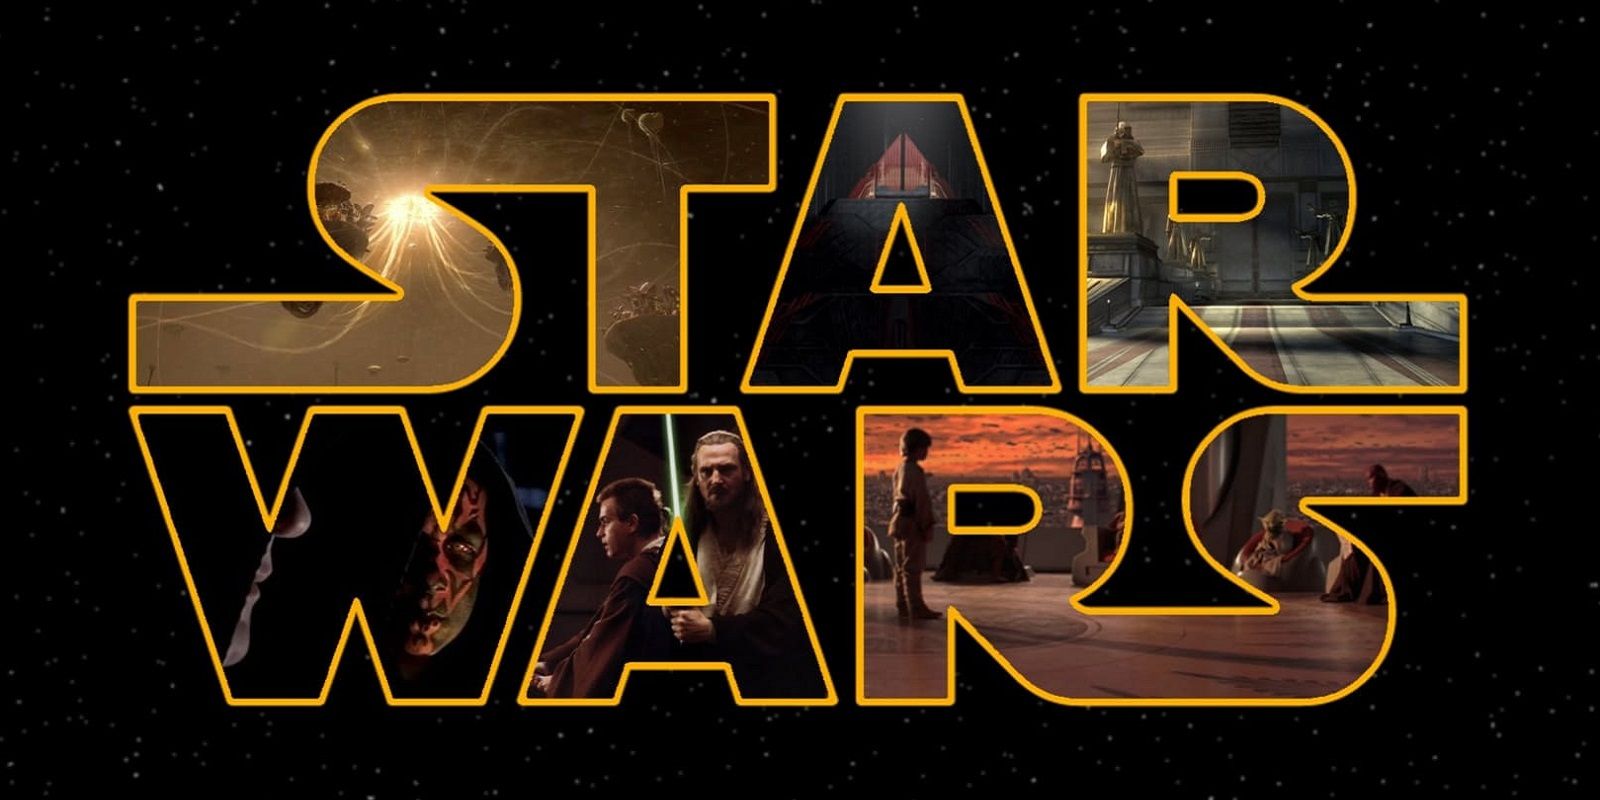 Star Wars logo on space background